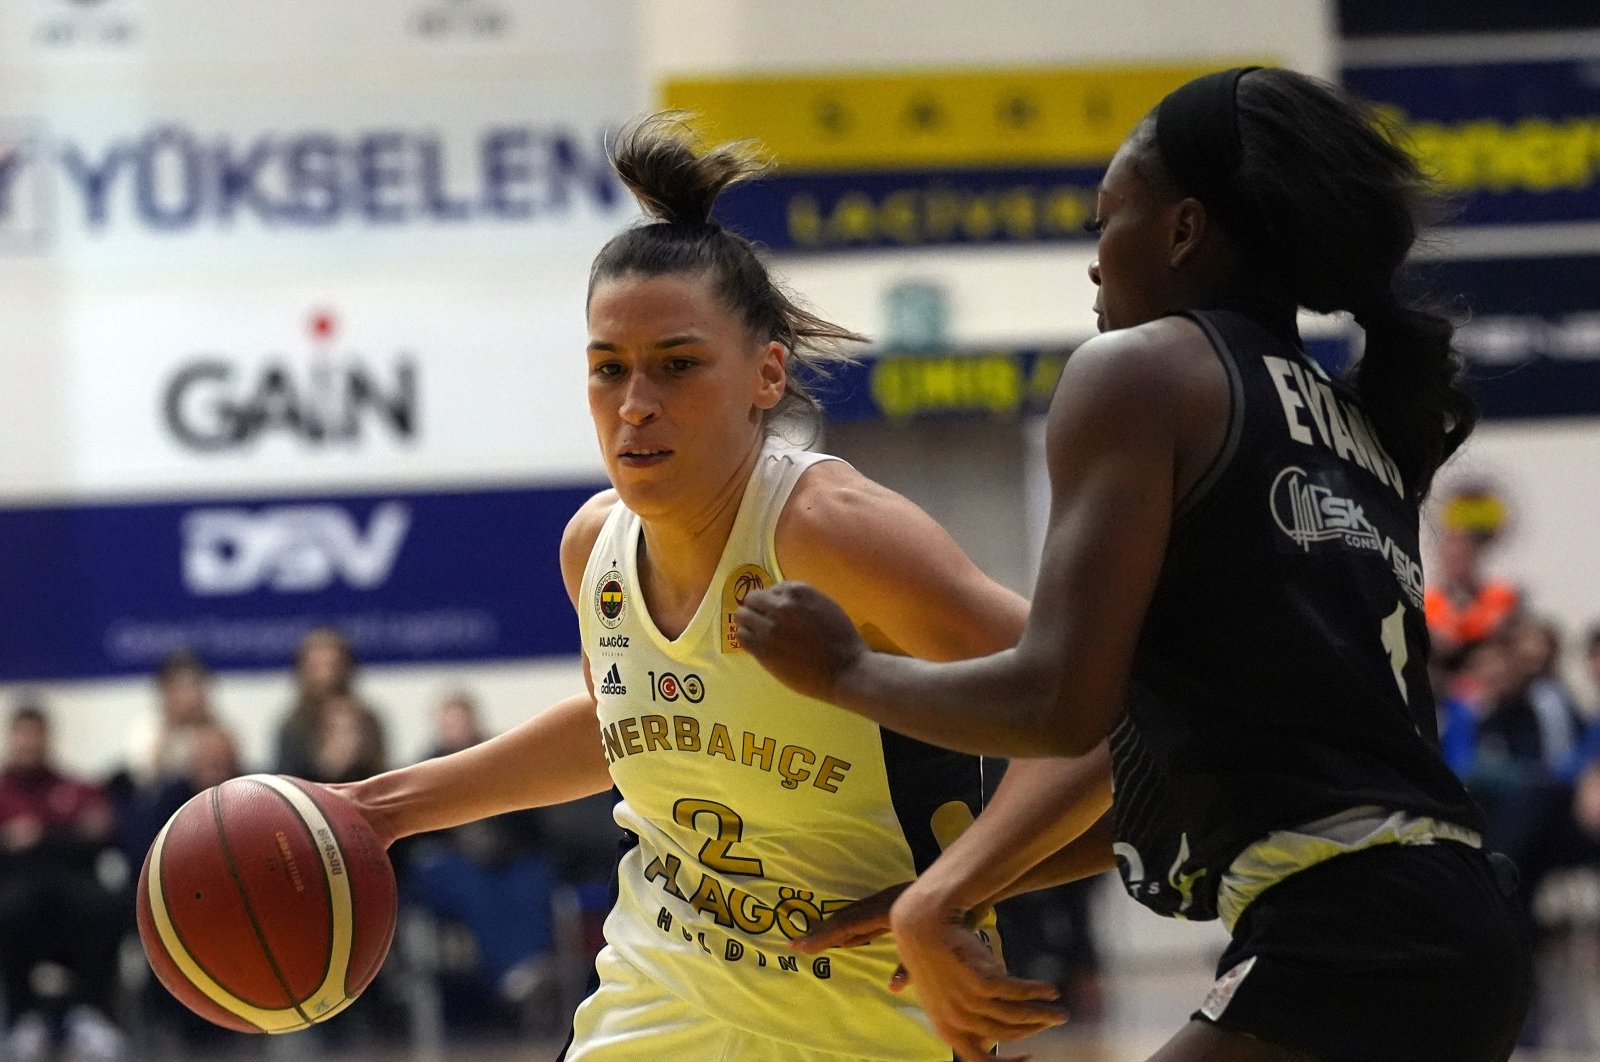 Fenerbahçe’s Sevgi Uzun makes history as WNBA’s 2nd Turkish player